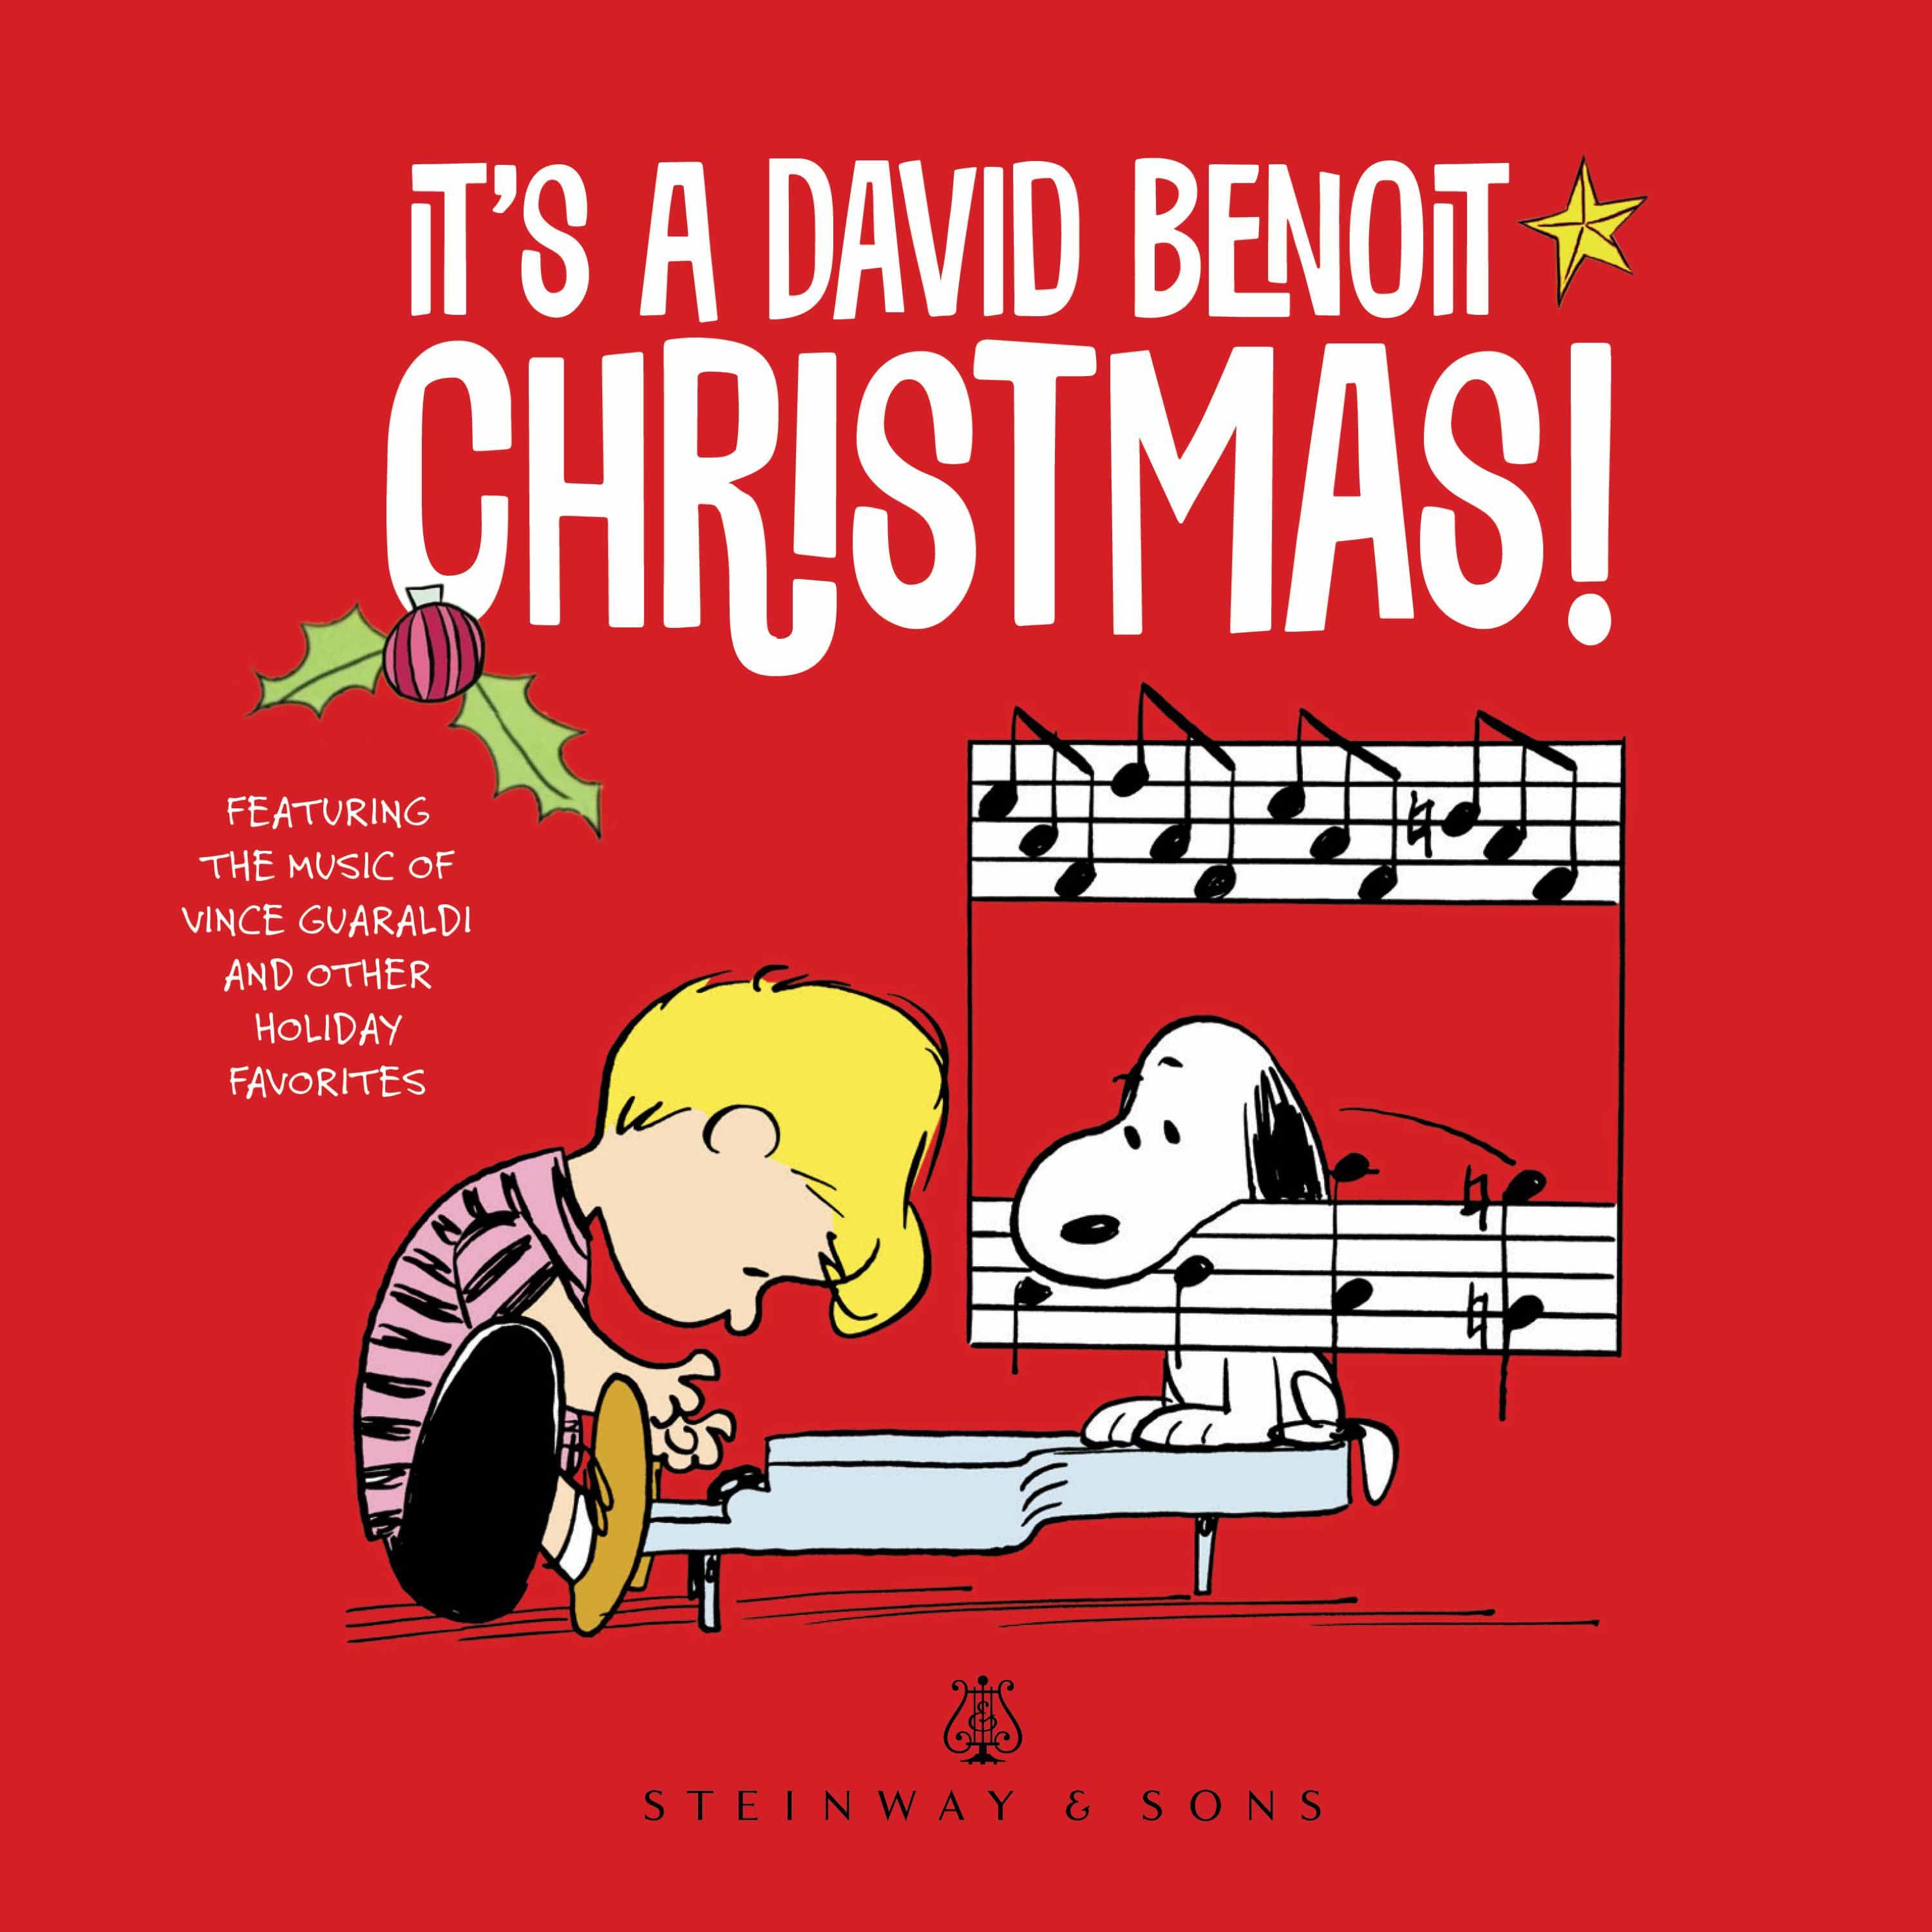 David Benoit - It’s a David Benoit Christmas! (2020) [FLAC 24bit/192kHz]